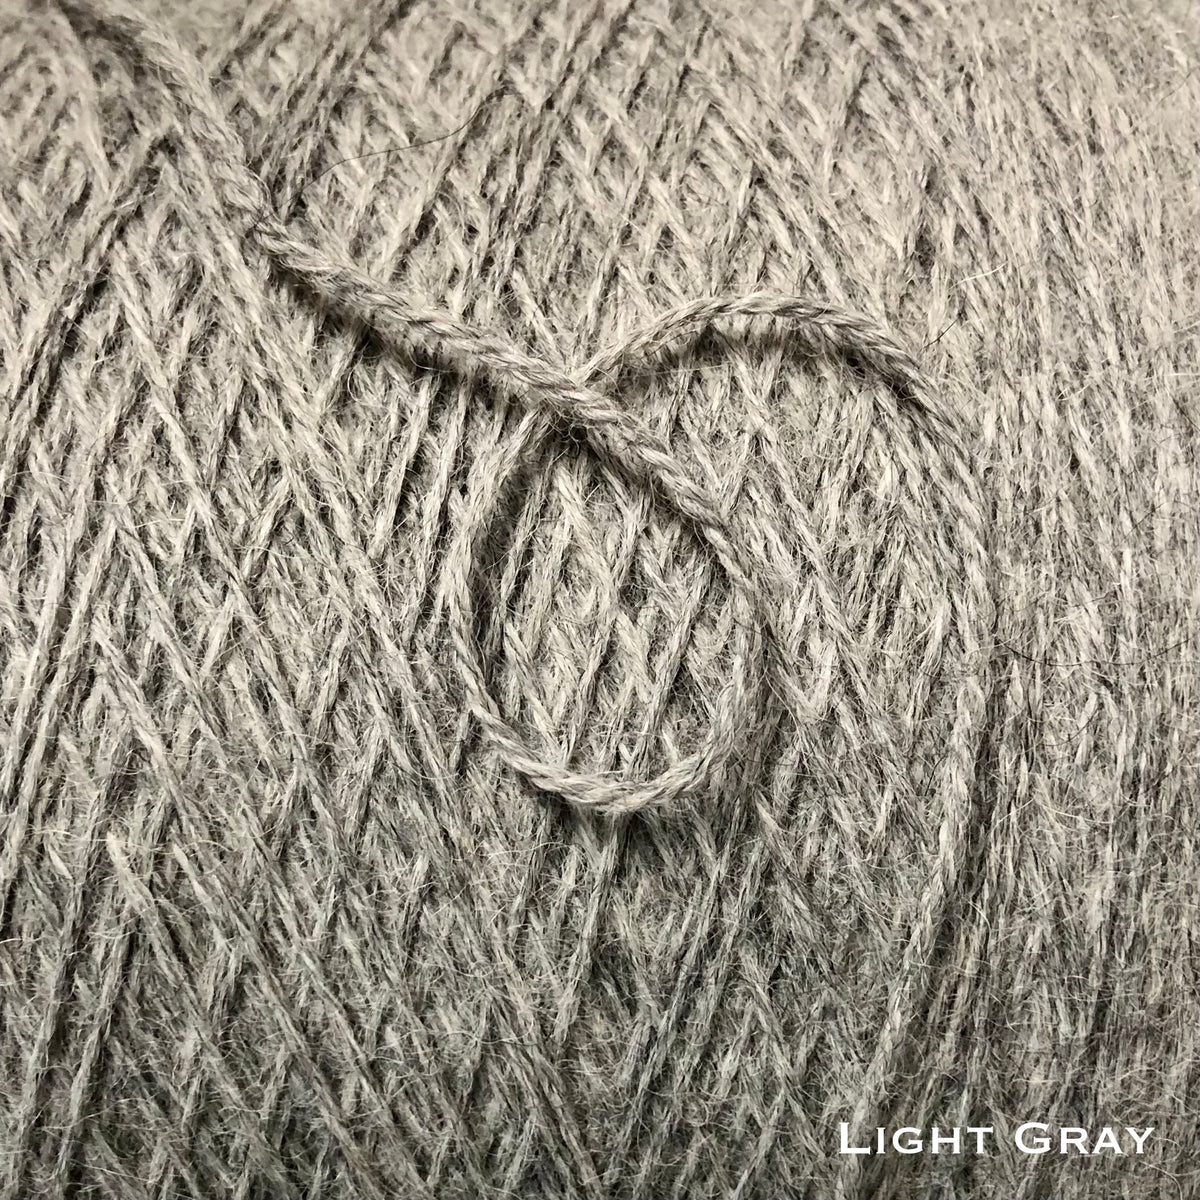 light gray sport weight alpaca wool yarn for knitting and crochet